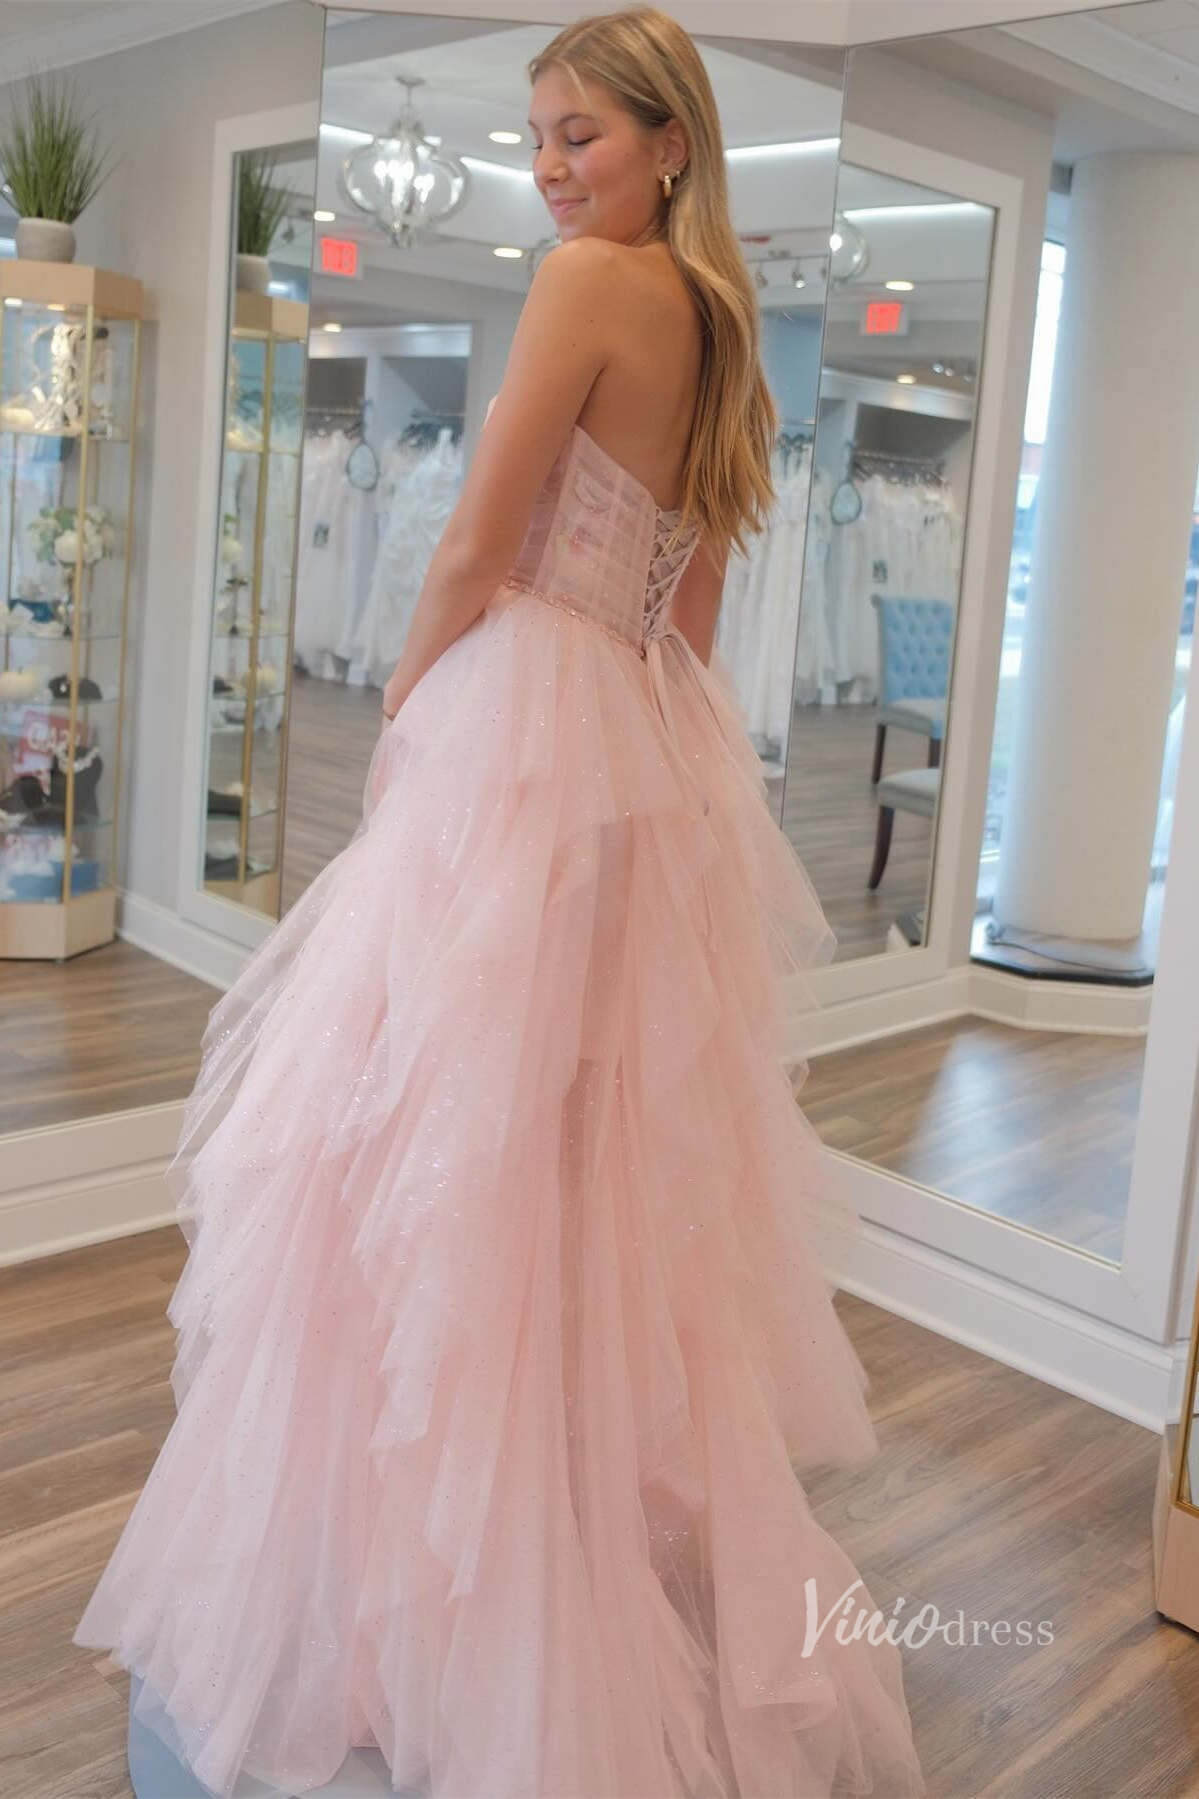 Sparkly Blush Pink Tiered Prom Dresses Strapless Pleated Boned Bodice FD4035-prom dresses-Viniodress-Viniodress